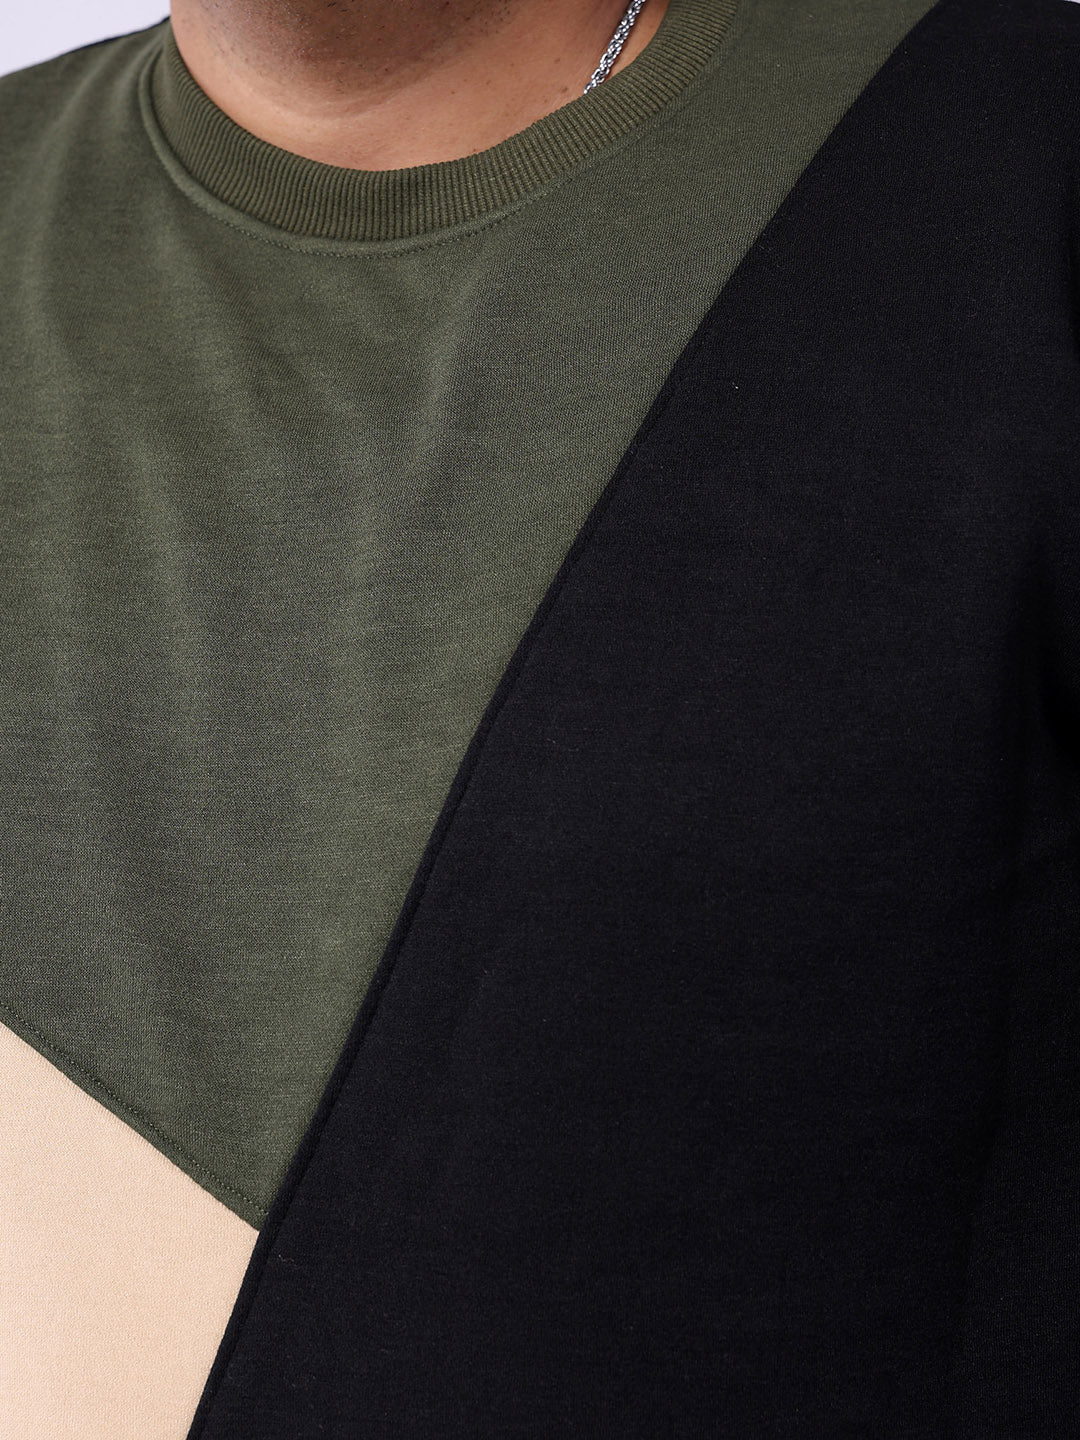 Shop Men Colourblocked Sweatshirts Online.